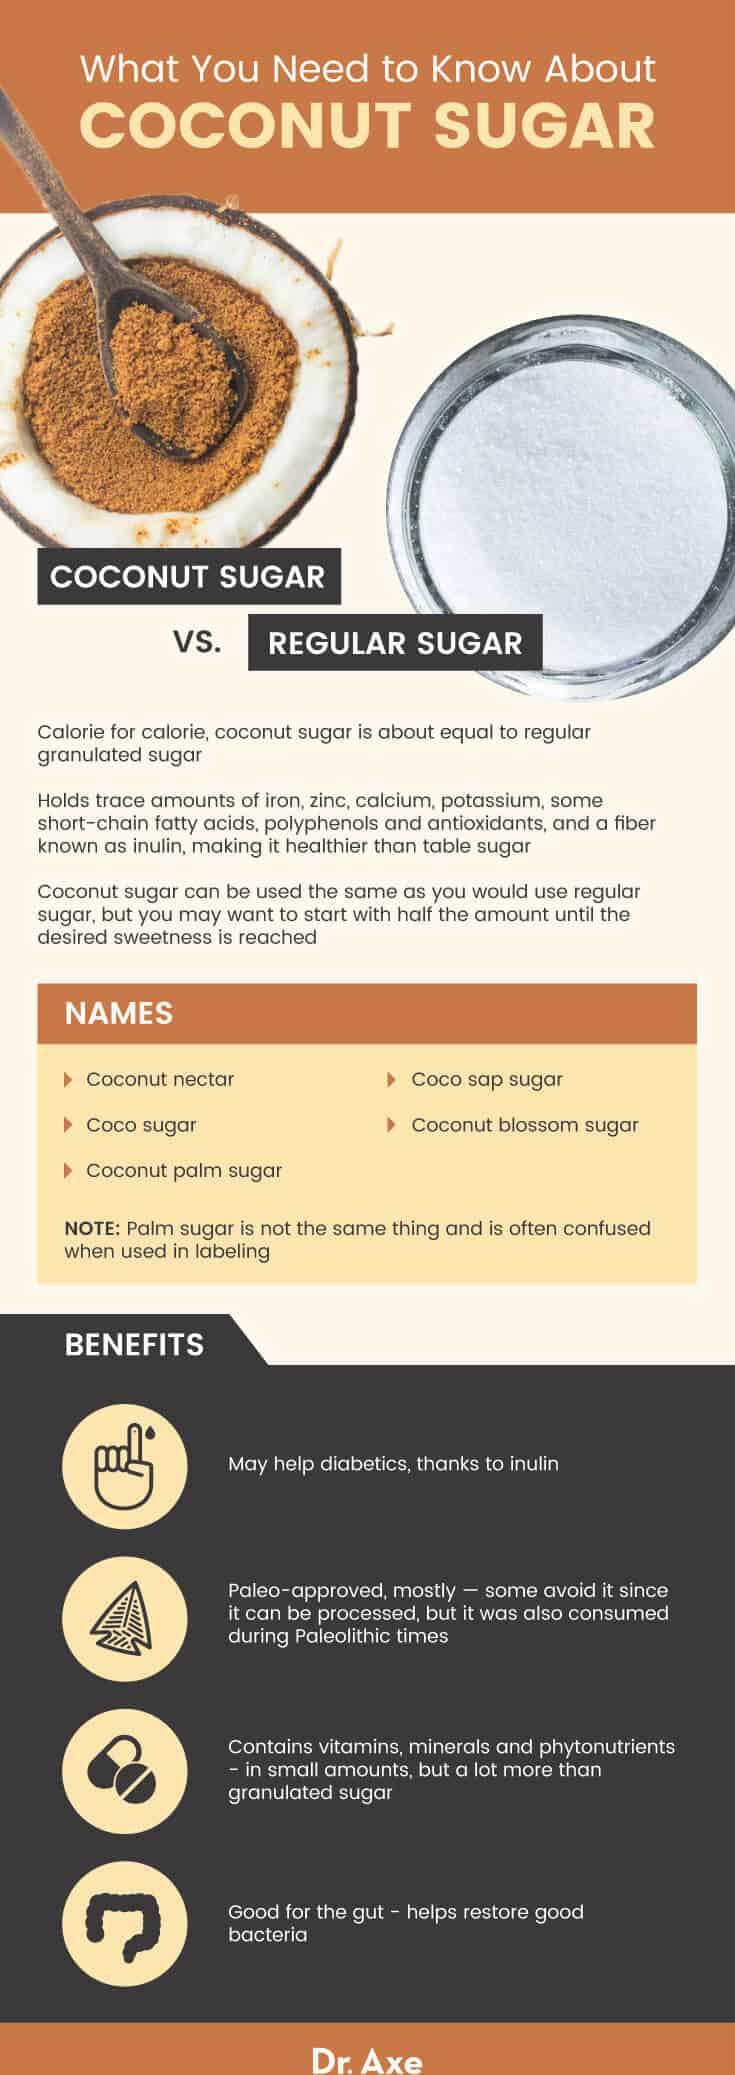 Coconut sugar guide - Dr. Axe